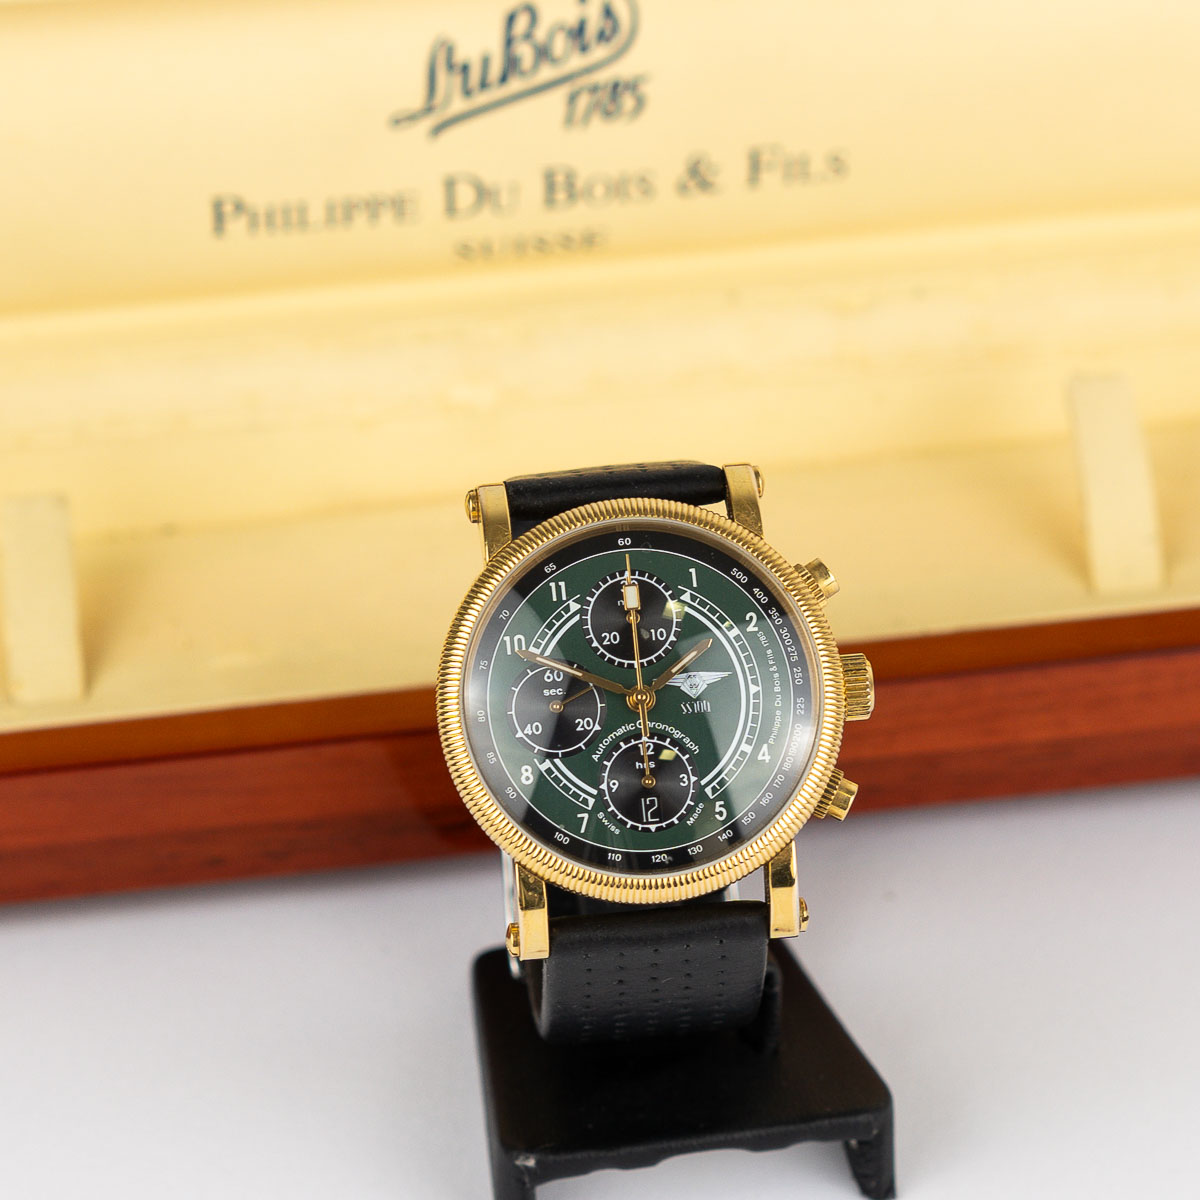 1 Armbanduhr Philippe Du Bois, Chronograph limitiert Lederband